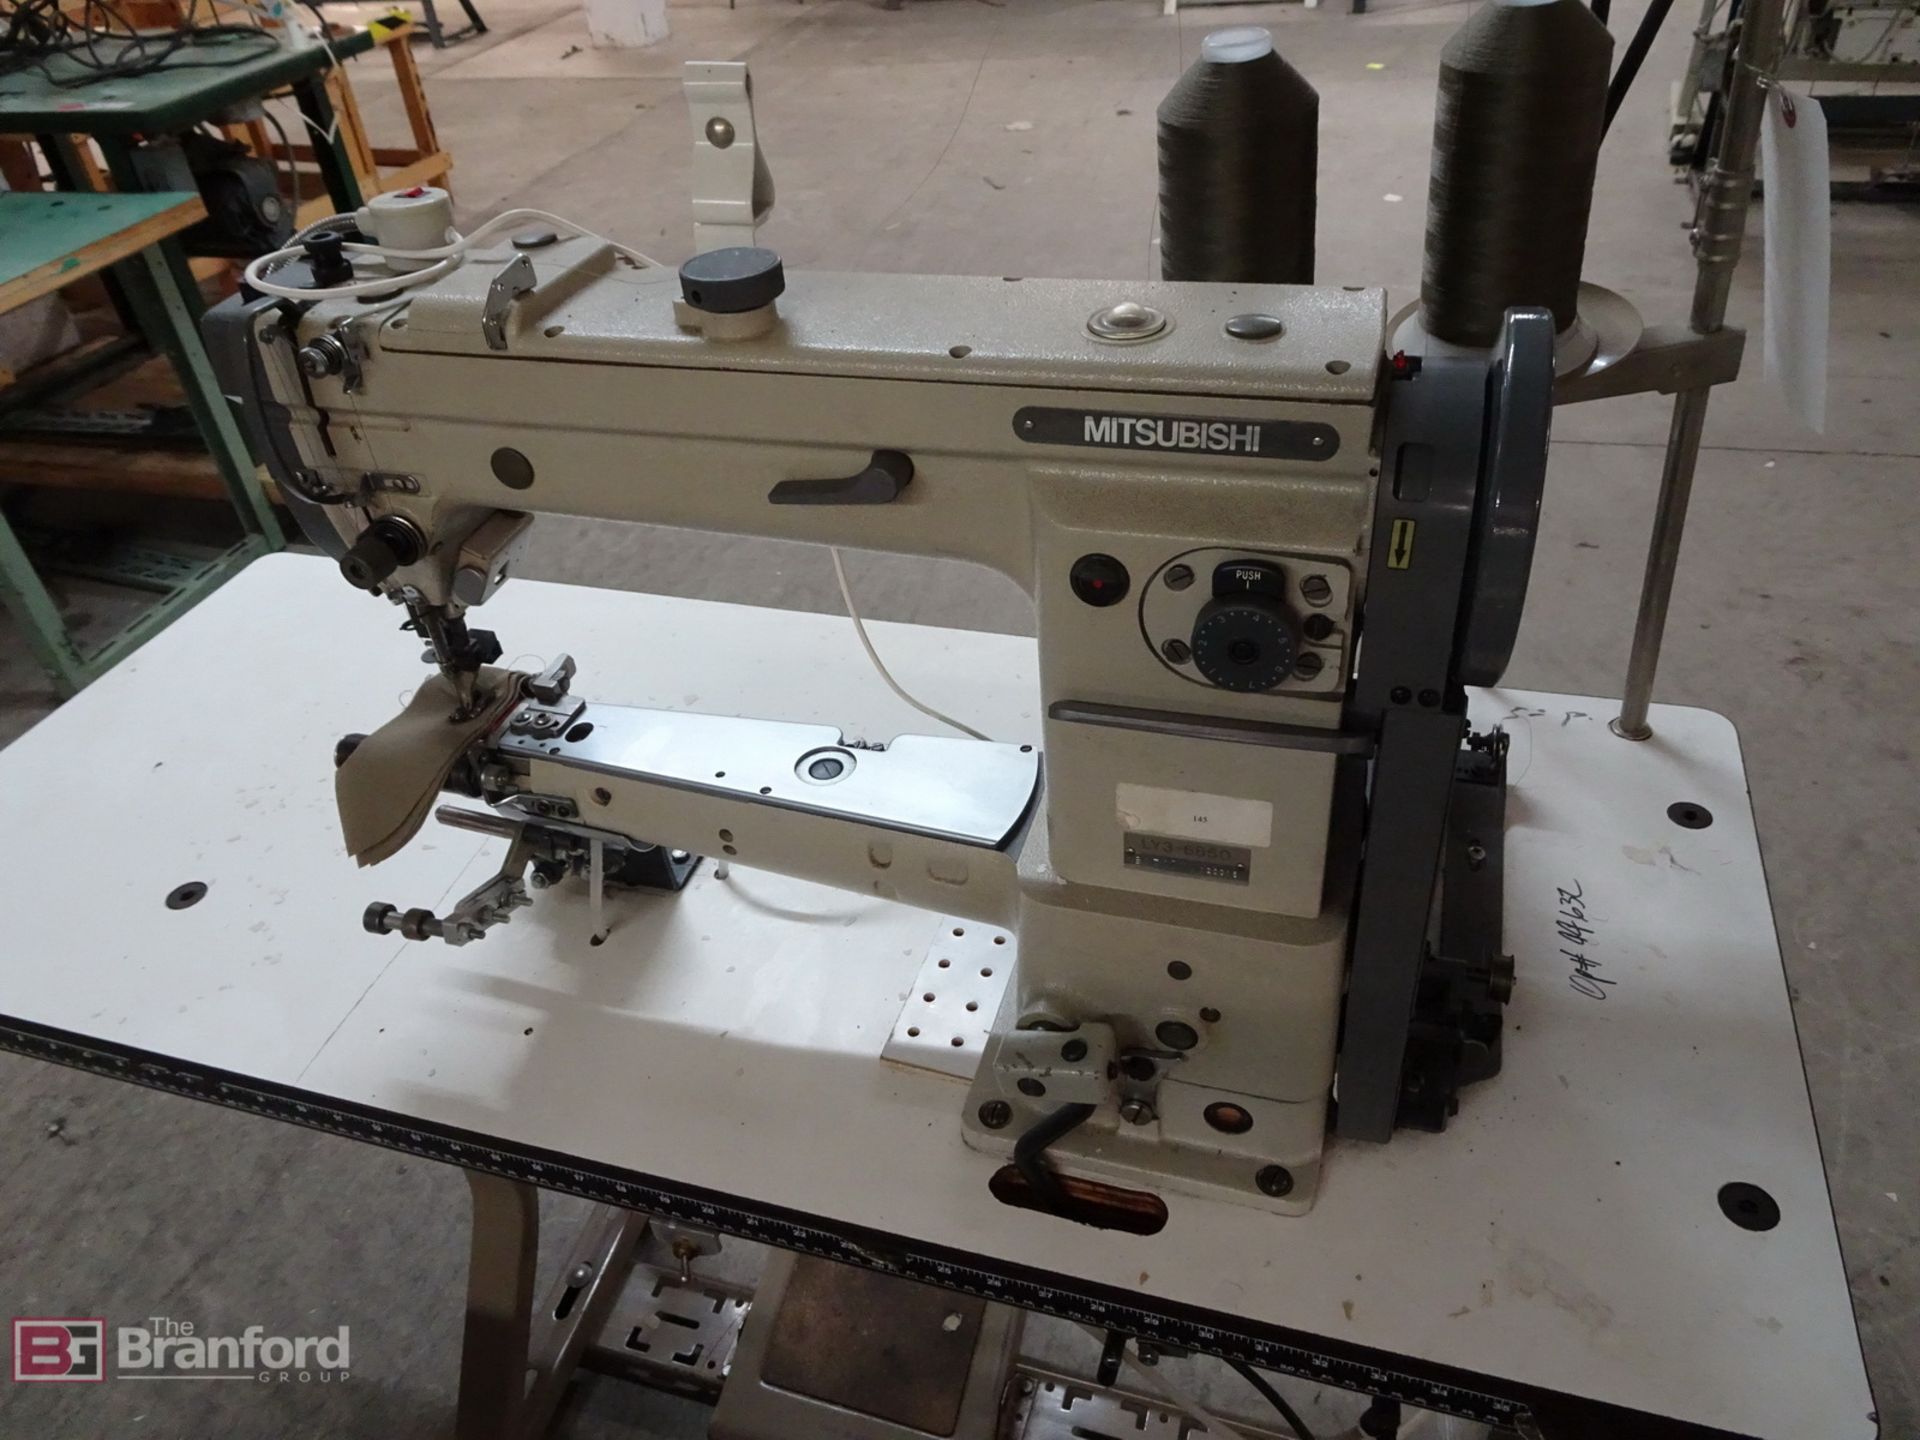 Mitsubishi LY3-6850 Sewing Machine